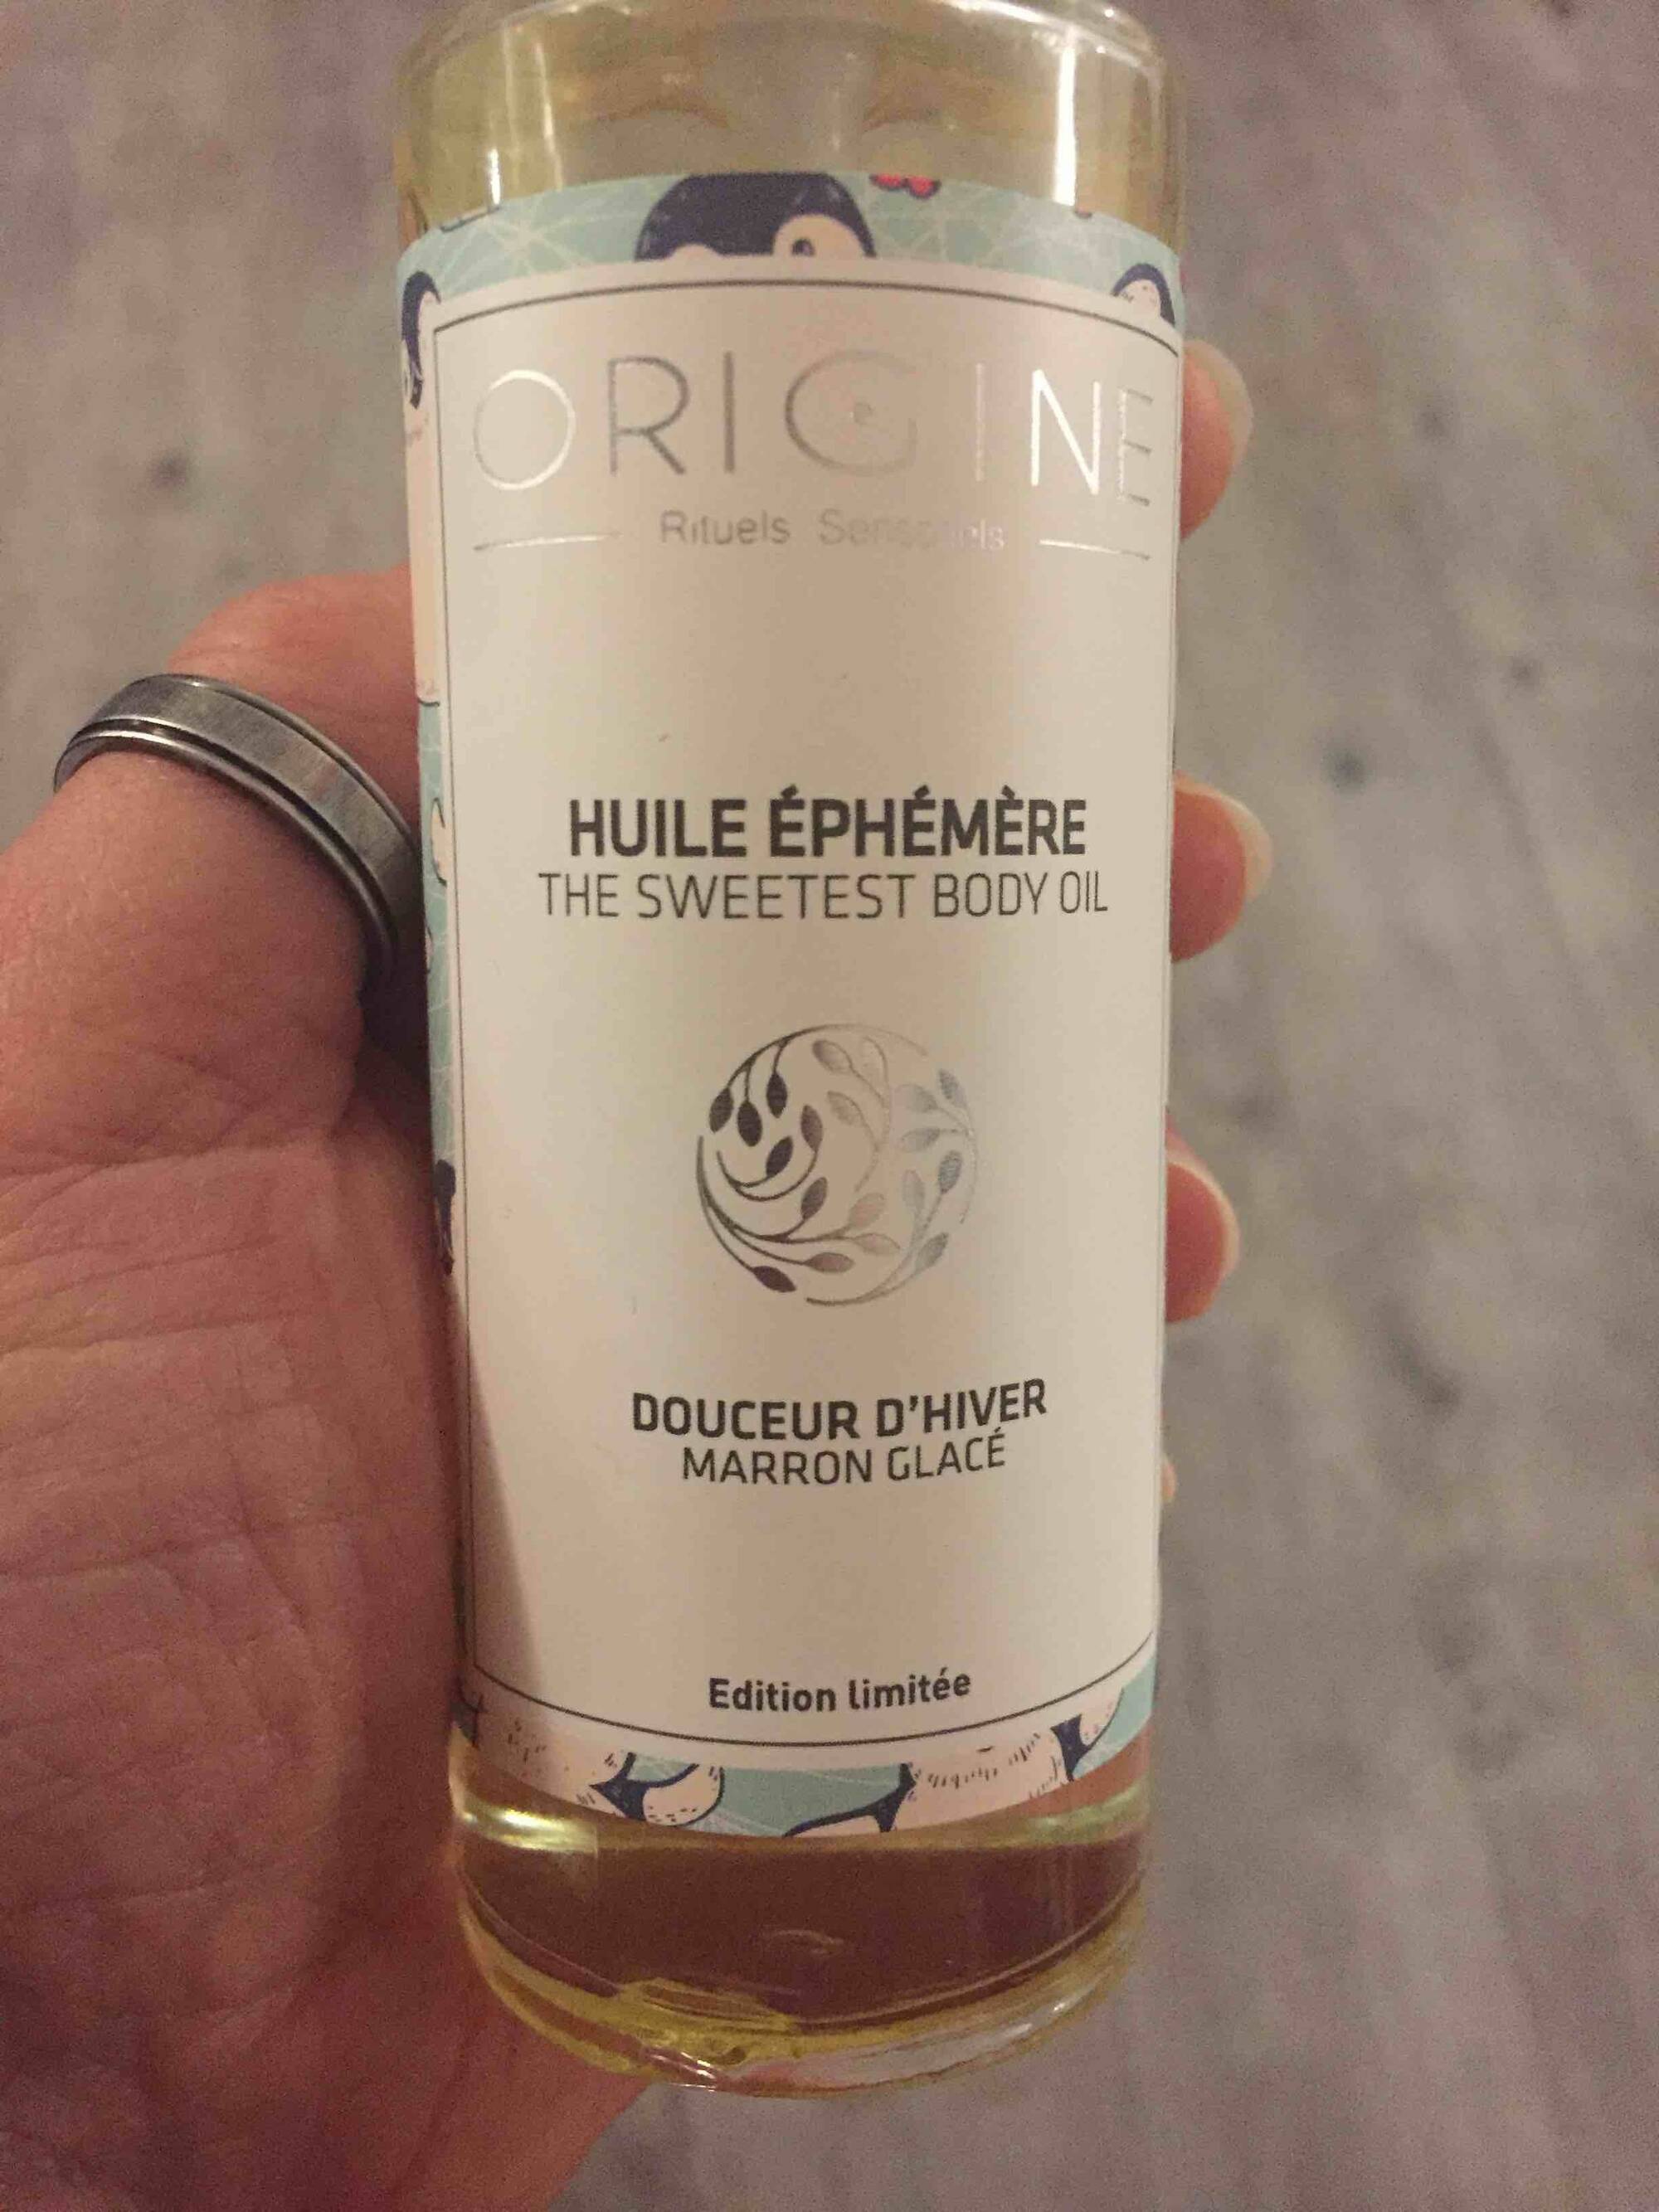 ORIGINE - Huile éphémère - The sweetest body oil